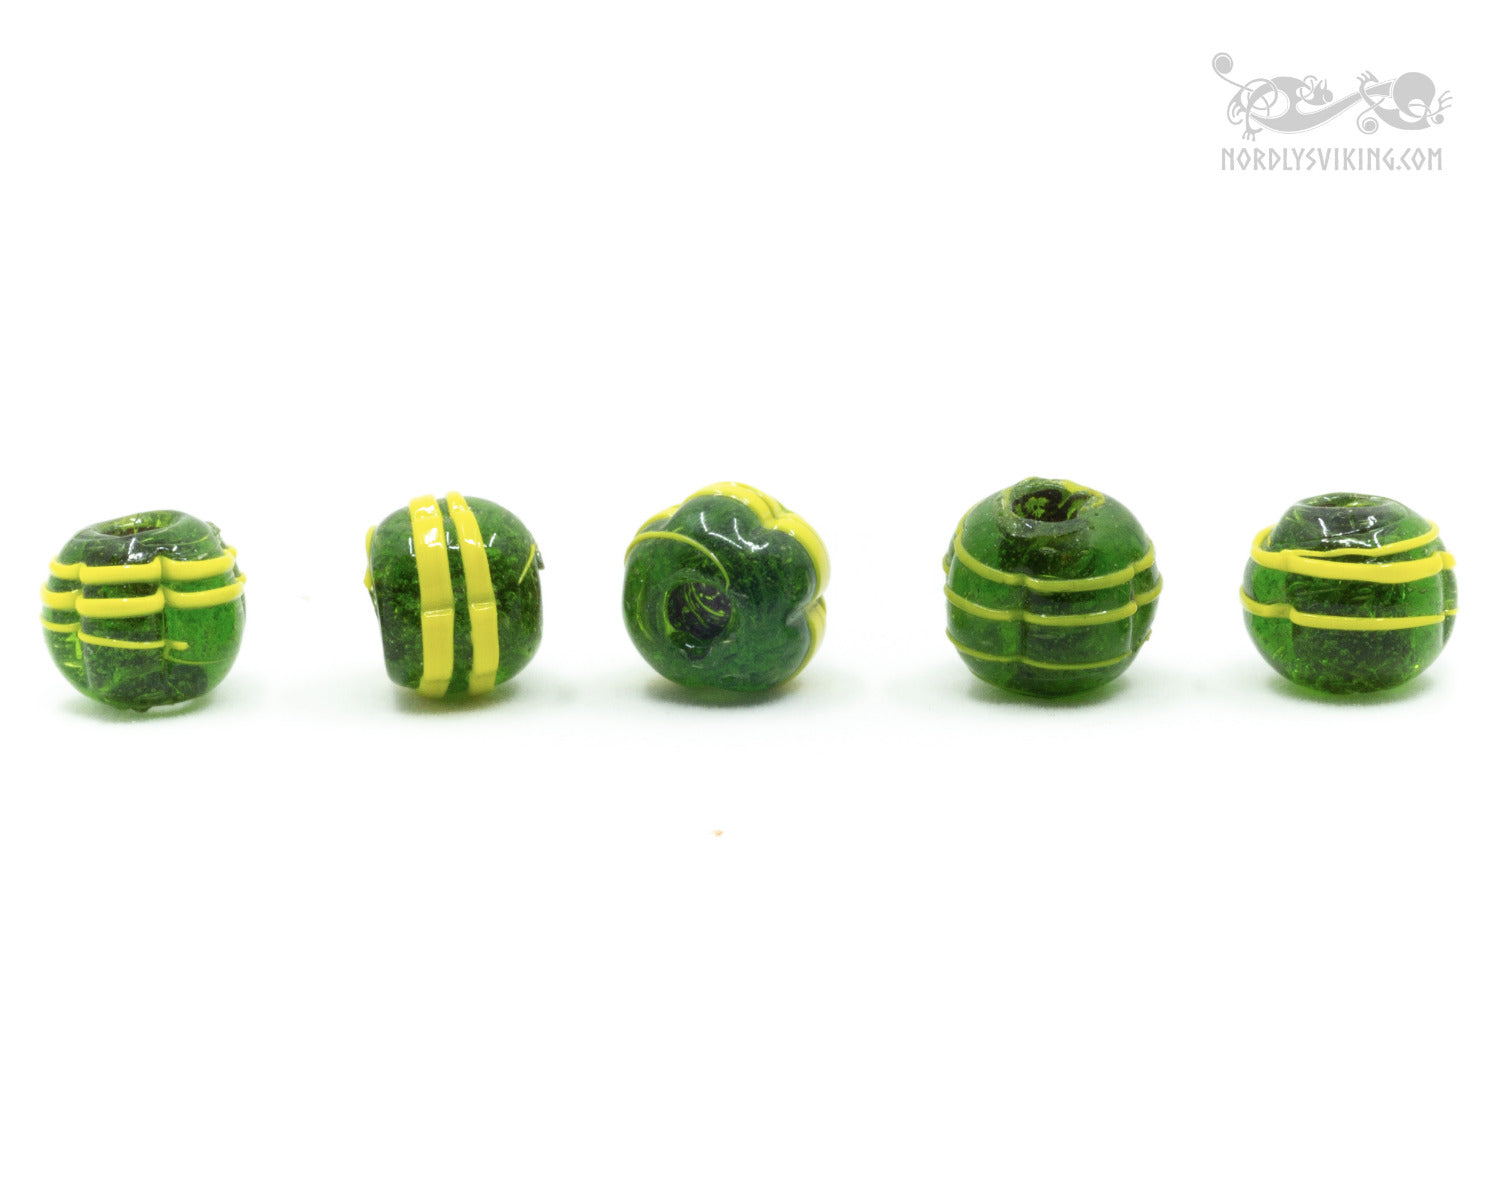 Dark green melon-shaped glass bead with yellow decor